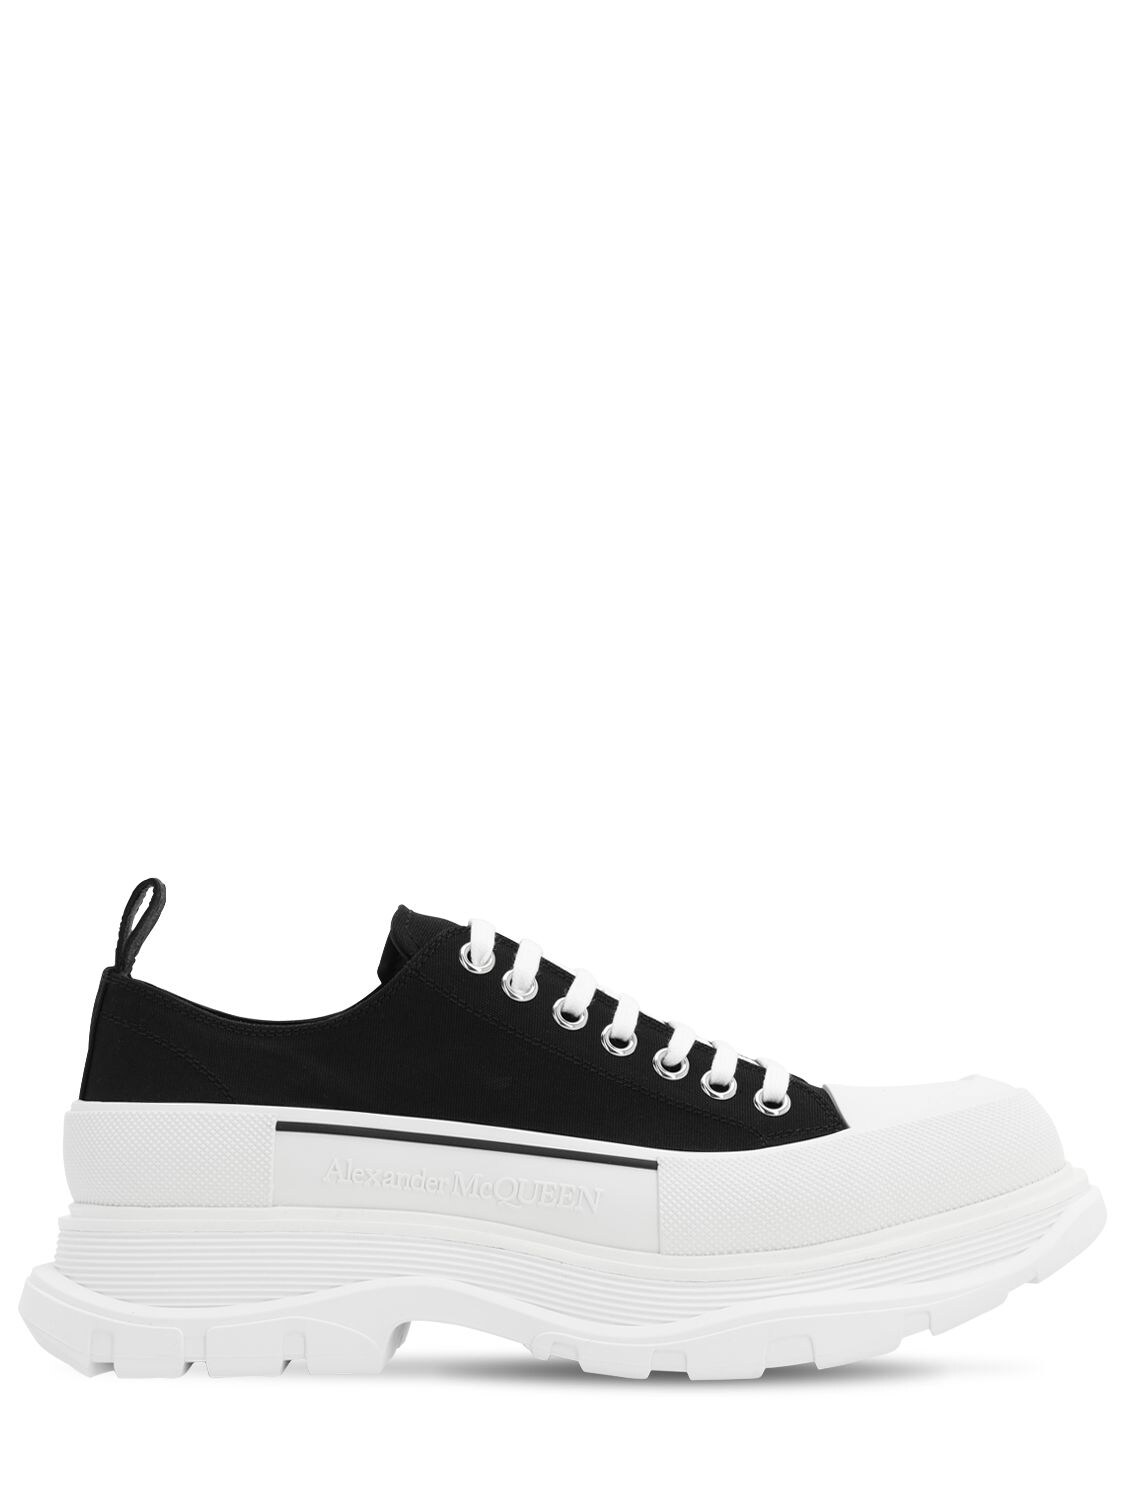 Alexander Mcqueen Black & White Tread Slick Lace-up Sneakers | ModeSens